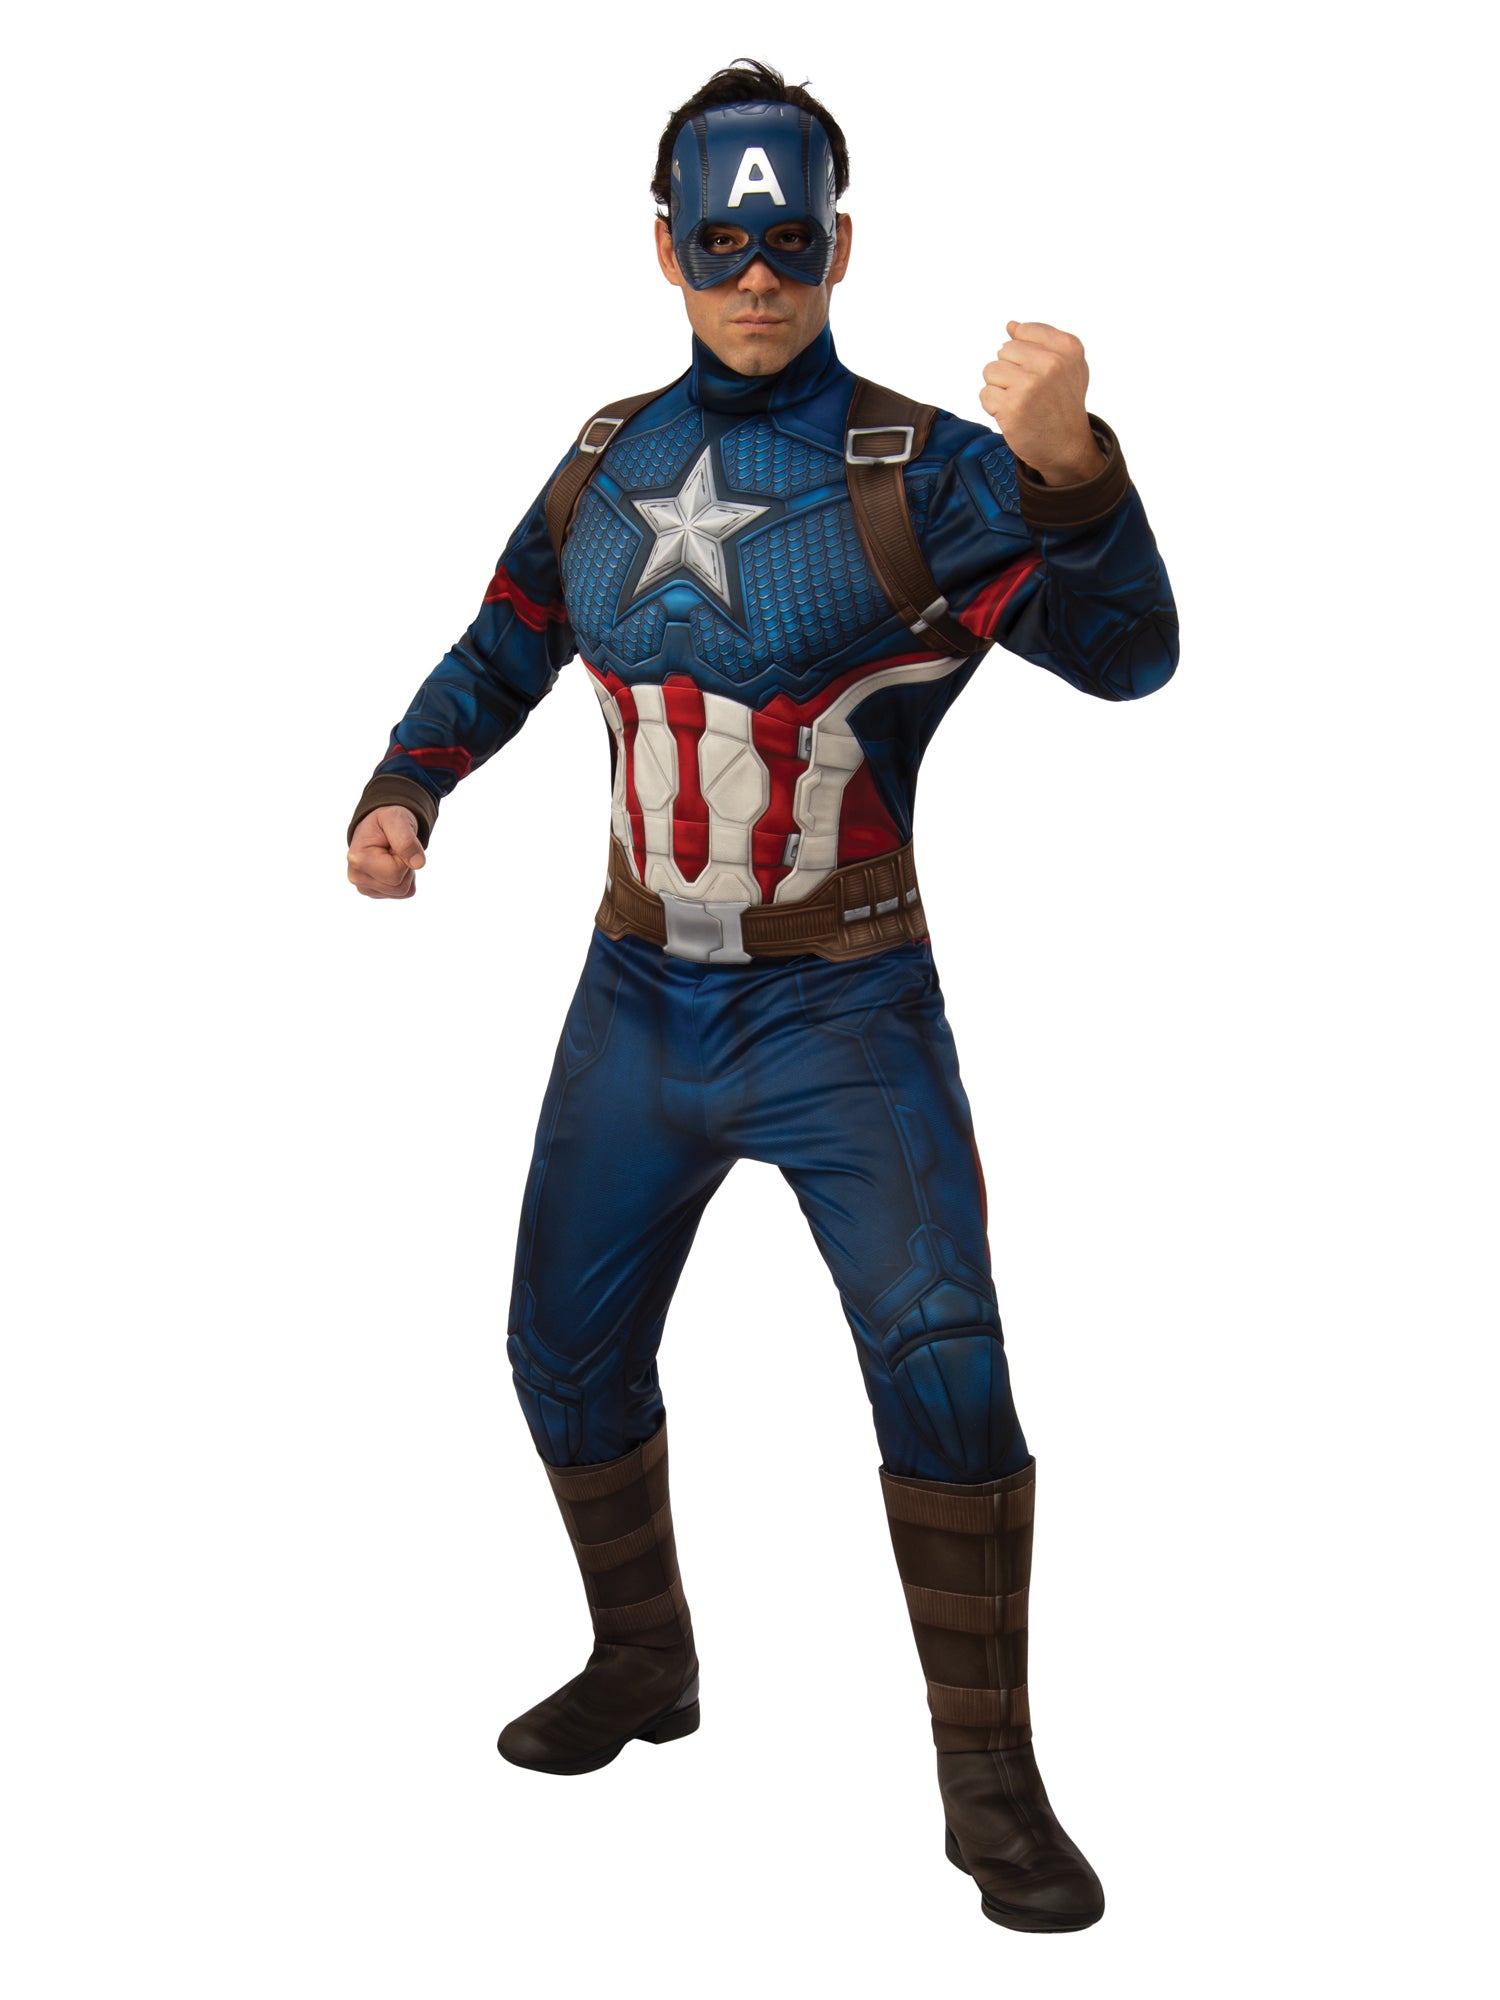 Captain America, Endgame, Avengers, Endgame, Multi, Marvel, Adult Costume, Extra Large, Front